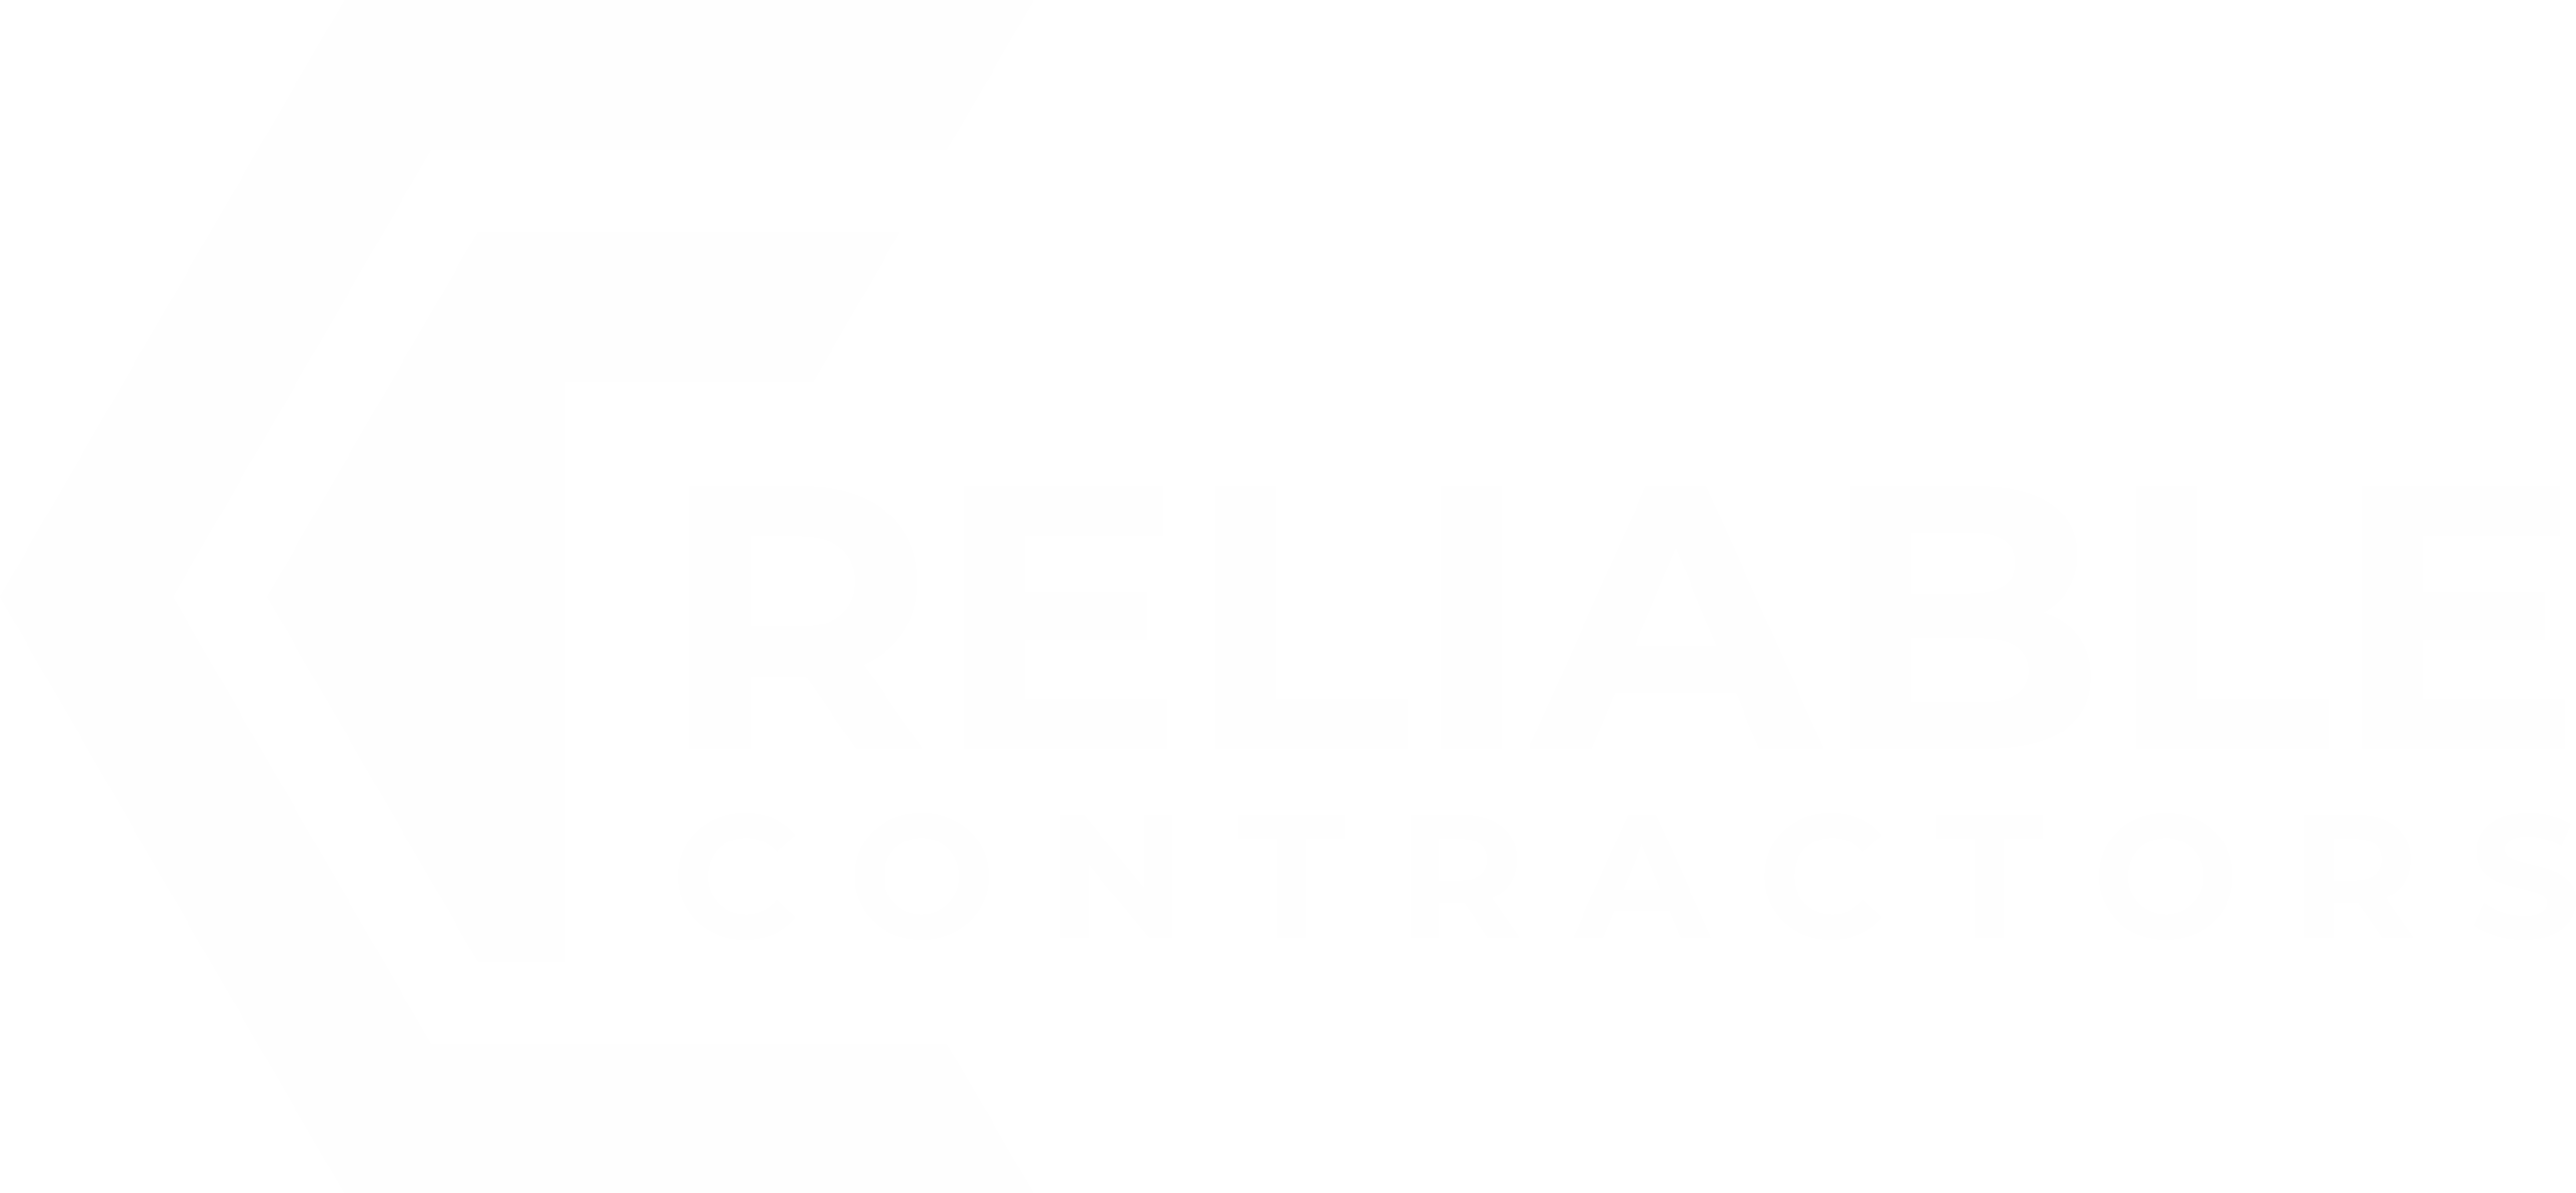 Reliable Logo